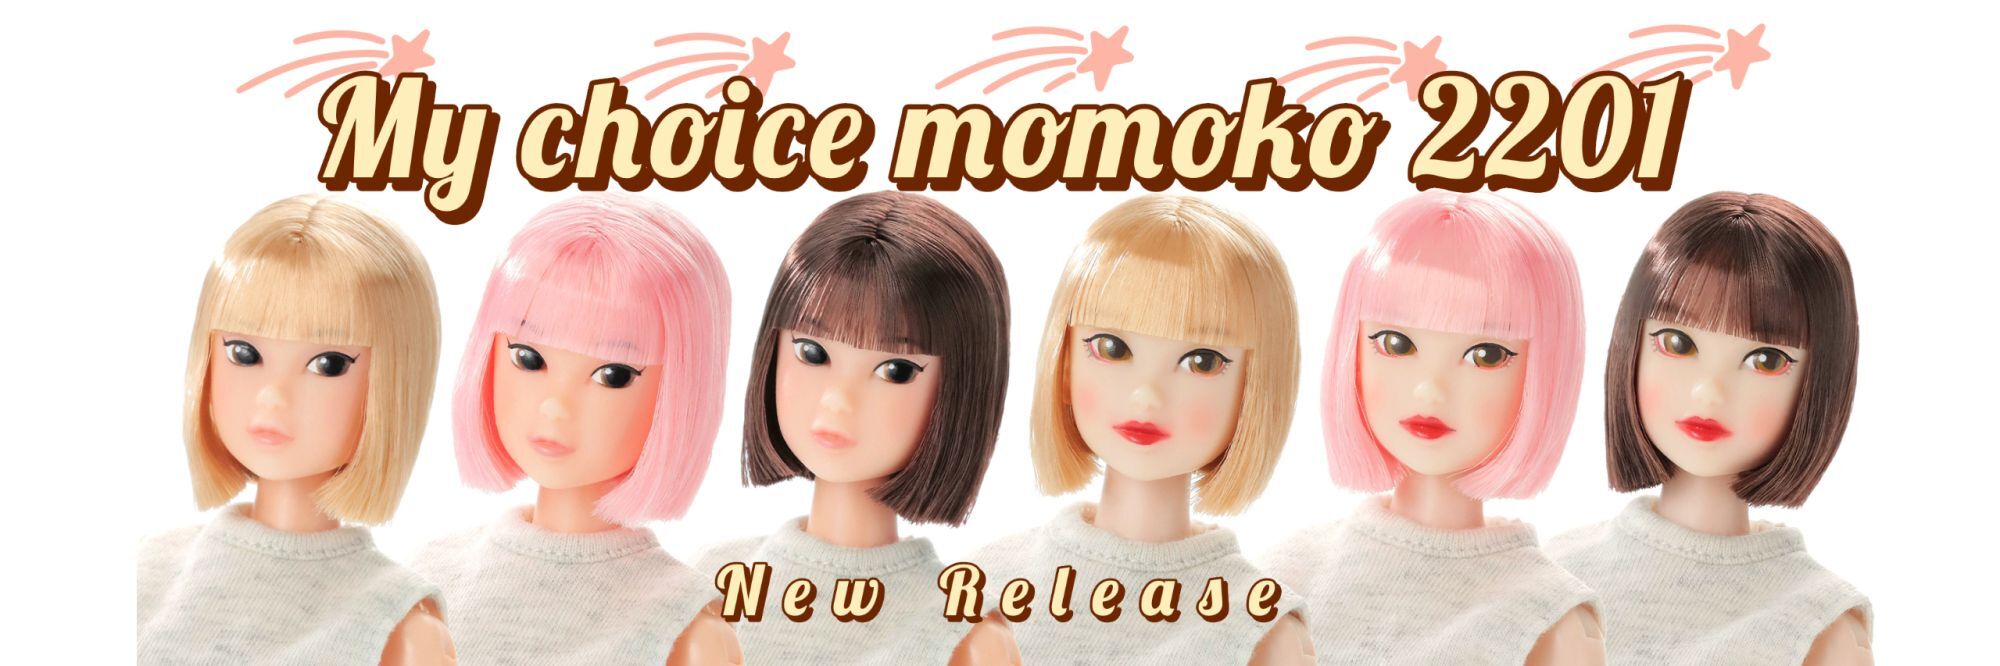 My choice momoko 2201